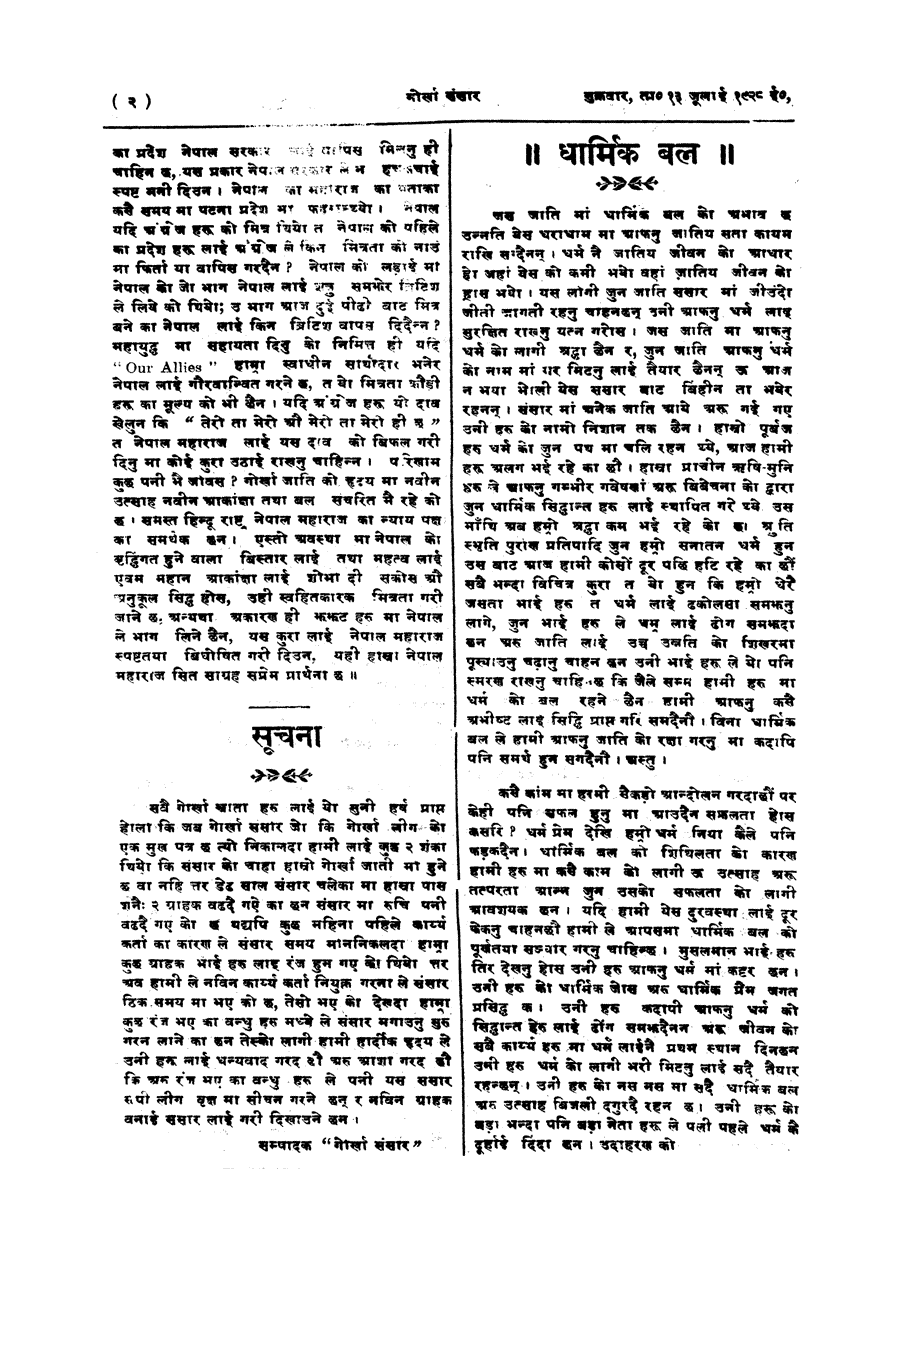 Gorkha Sansar, 13 July 1928, page 2